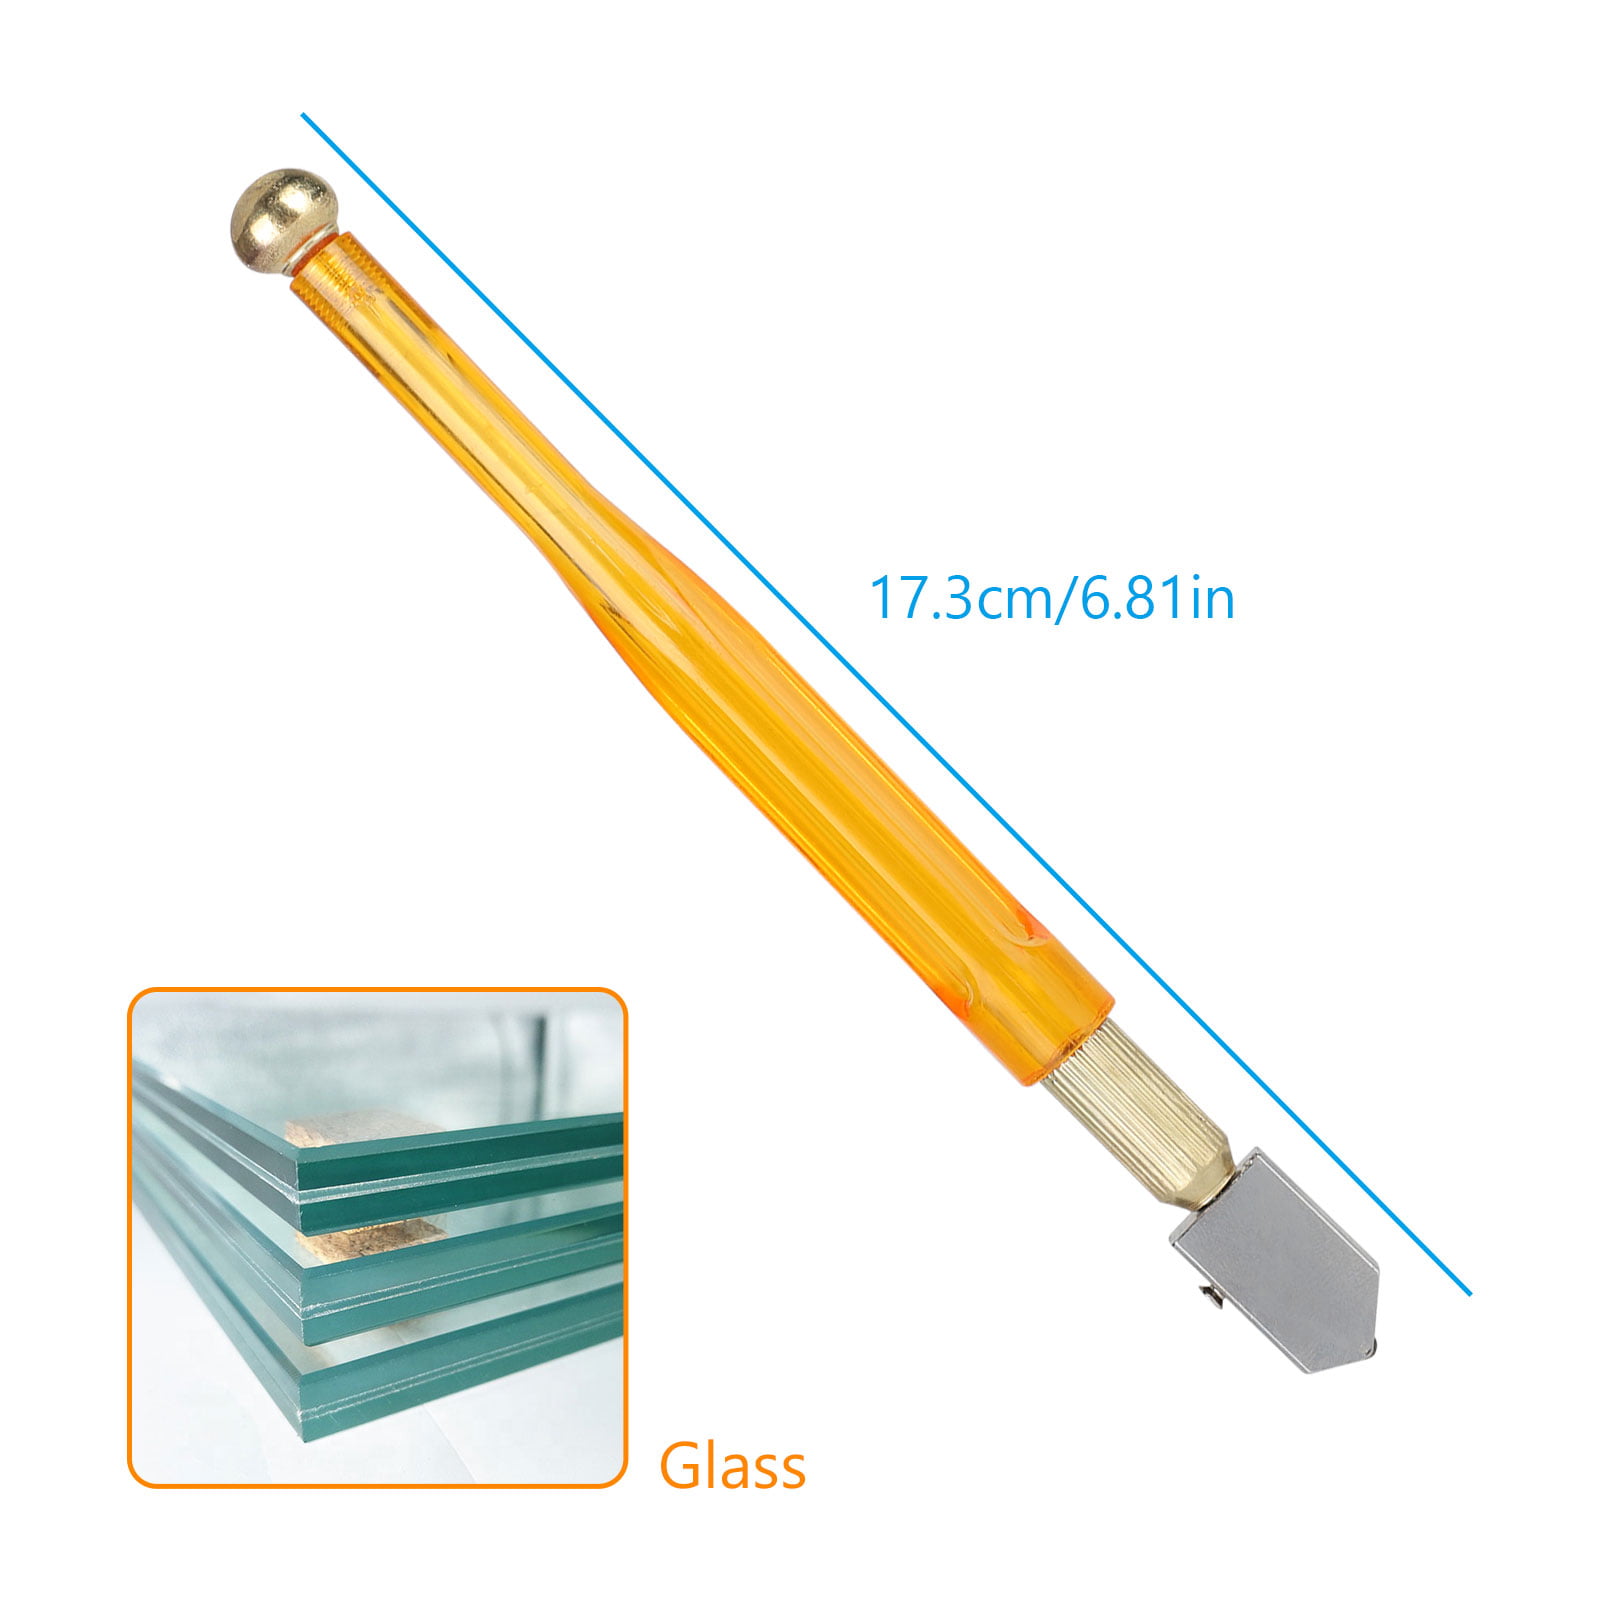 HT Hometinker Glass Cutter 2mm-20mm Glass Cutter Tool with Glass Cutting Oil Glass Cutting Tool with Aotomatic Oil Feed Glass Cutter for Mirrors/tiles